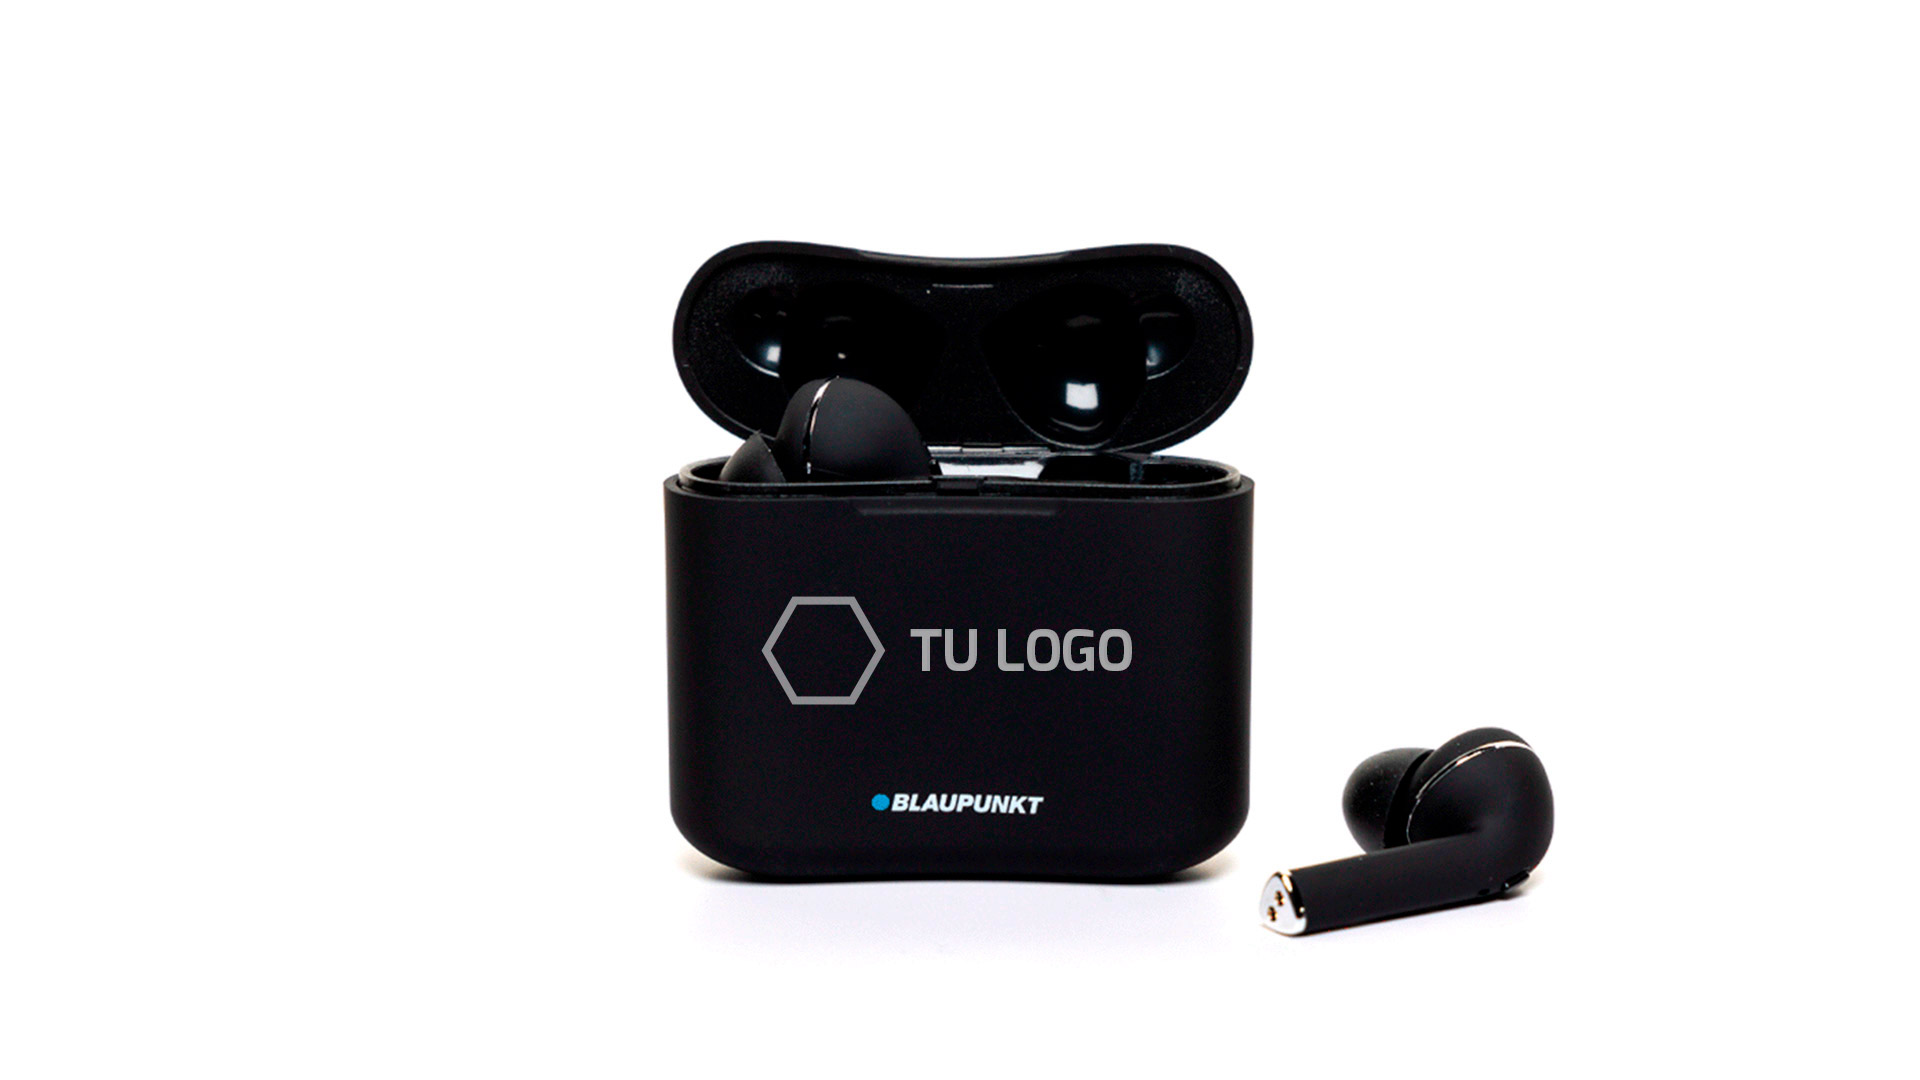 Auriculares Bluetooth Sound / Auriculares sin Cable Personalizados